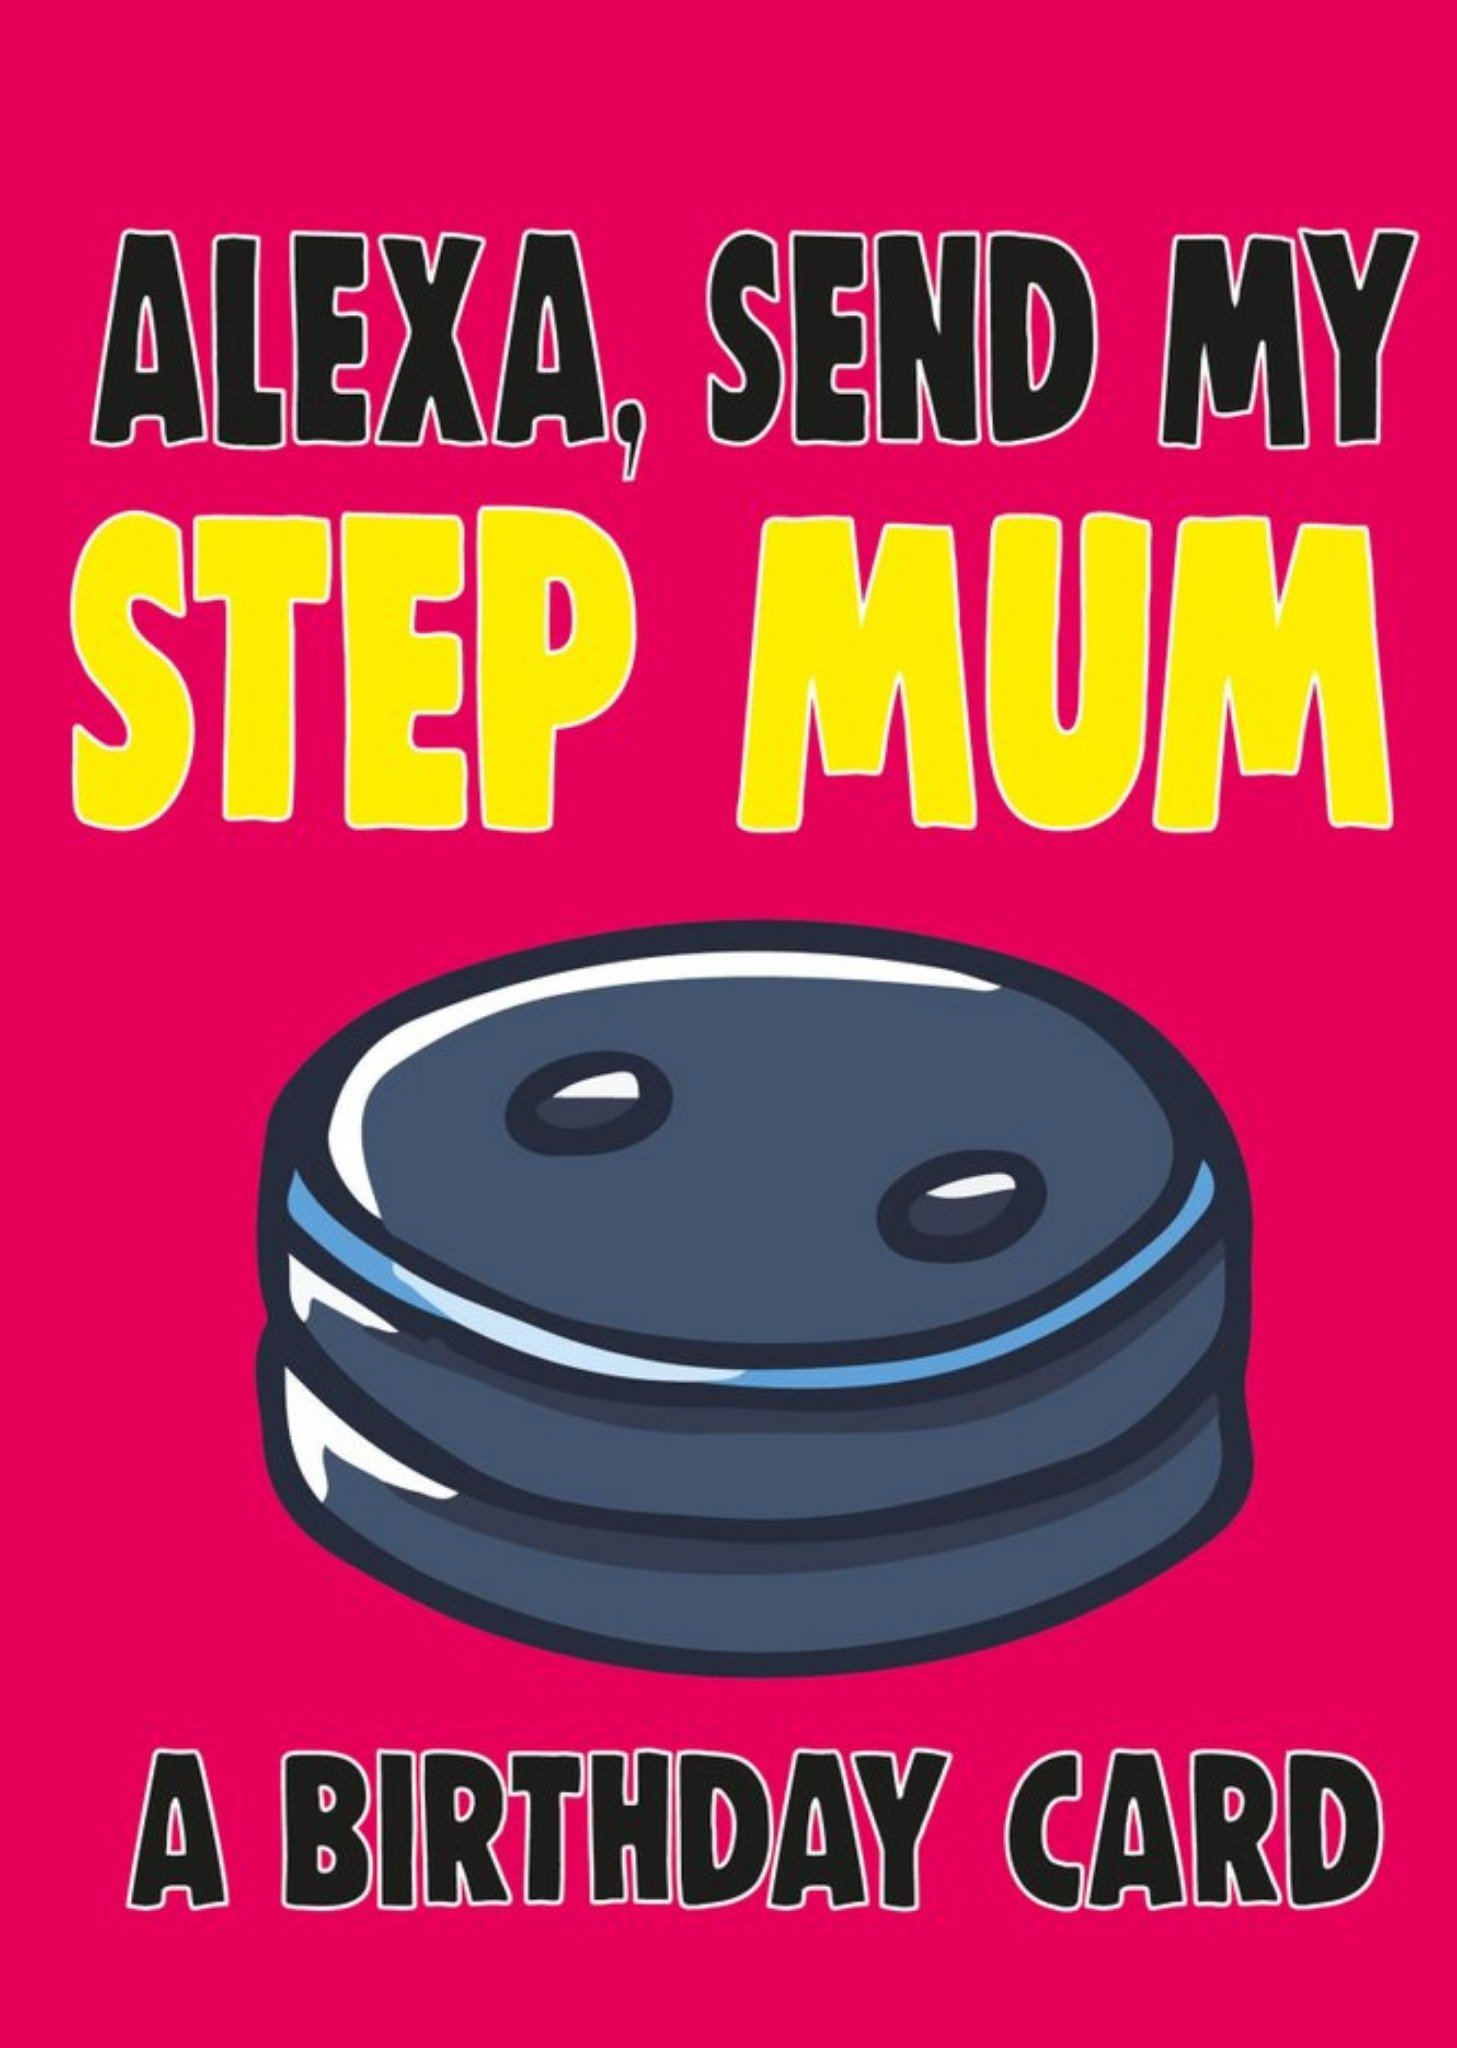 Moonpig Bright Bold Typography With An Illustration Of Alexa Step Mum Birthday Card, Large